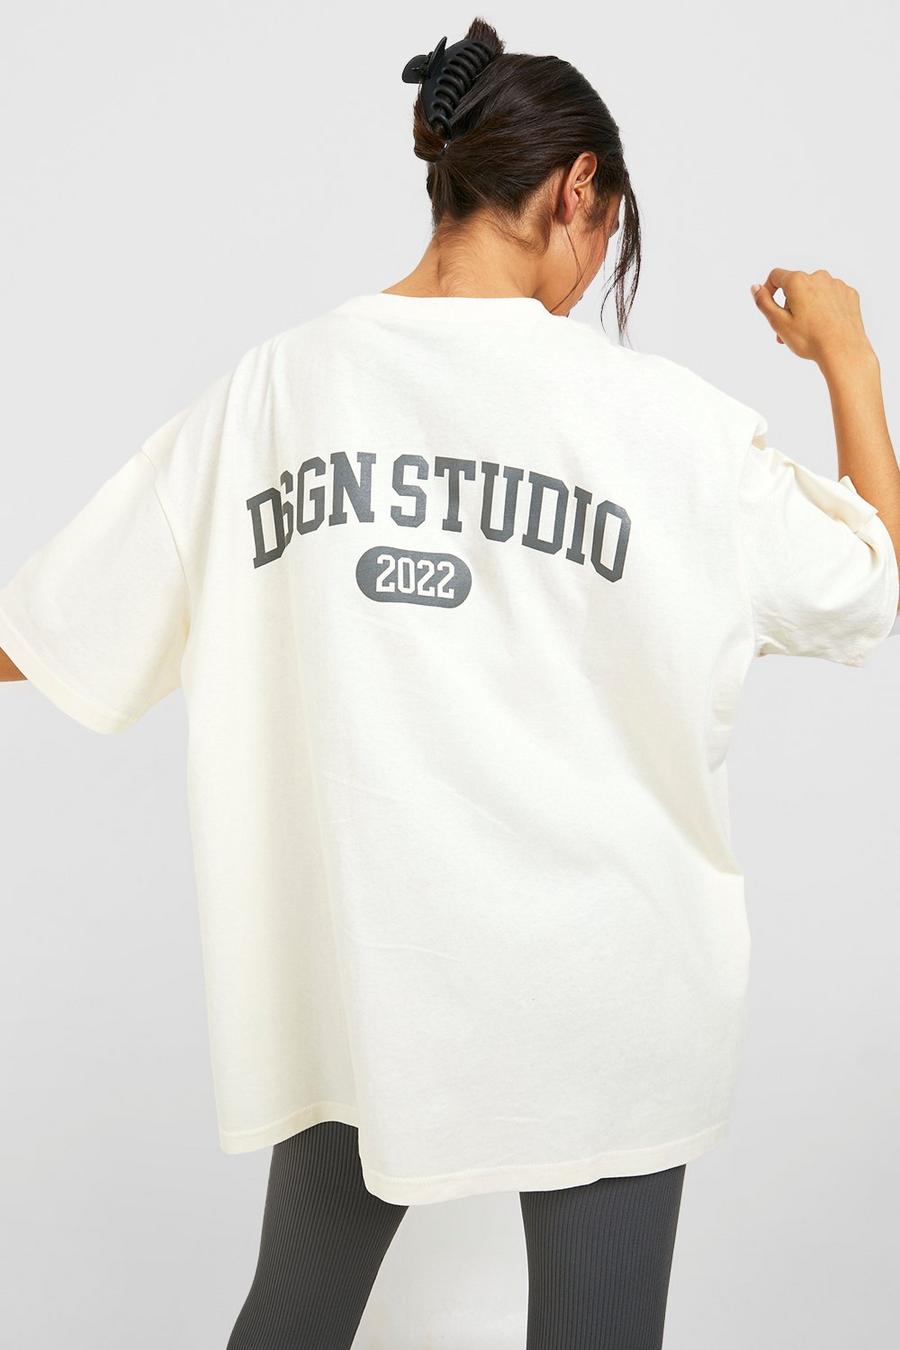 T-shirt oversize à slogan Dsgn Studio au dos, Ecru